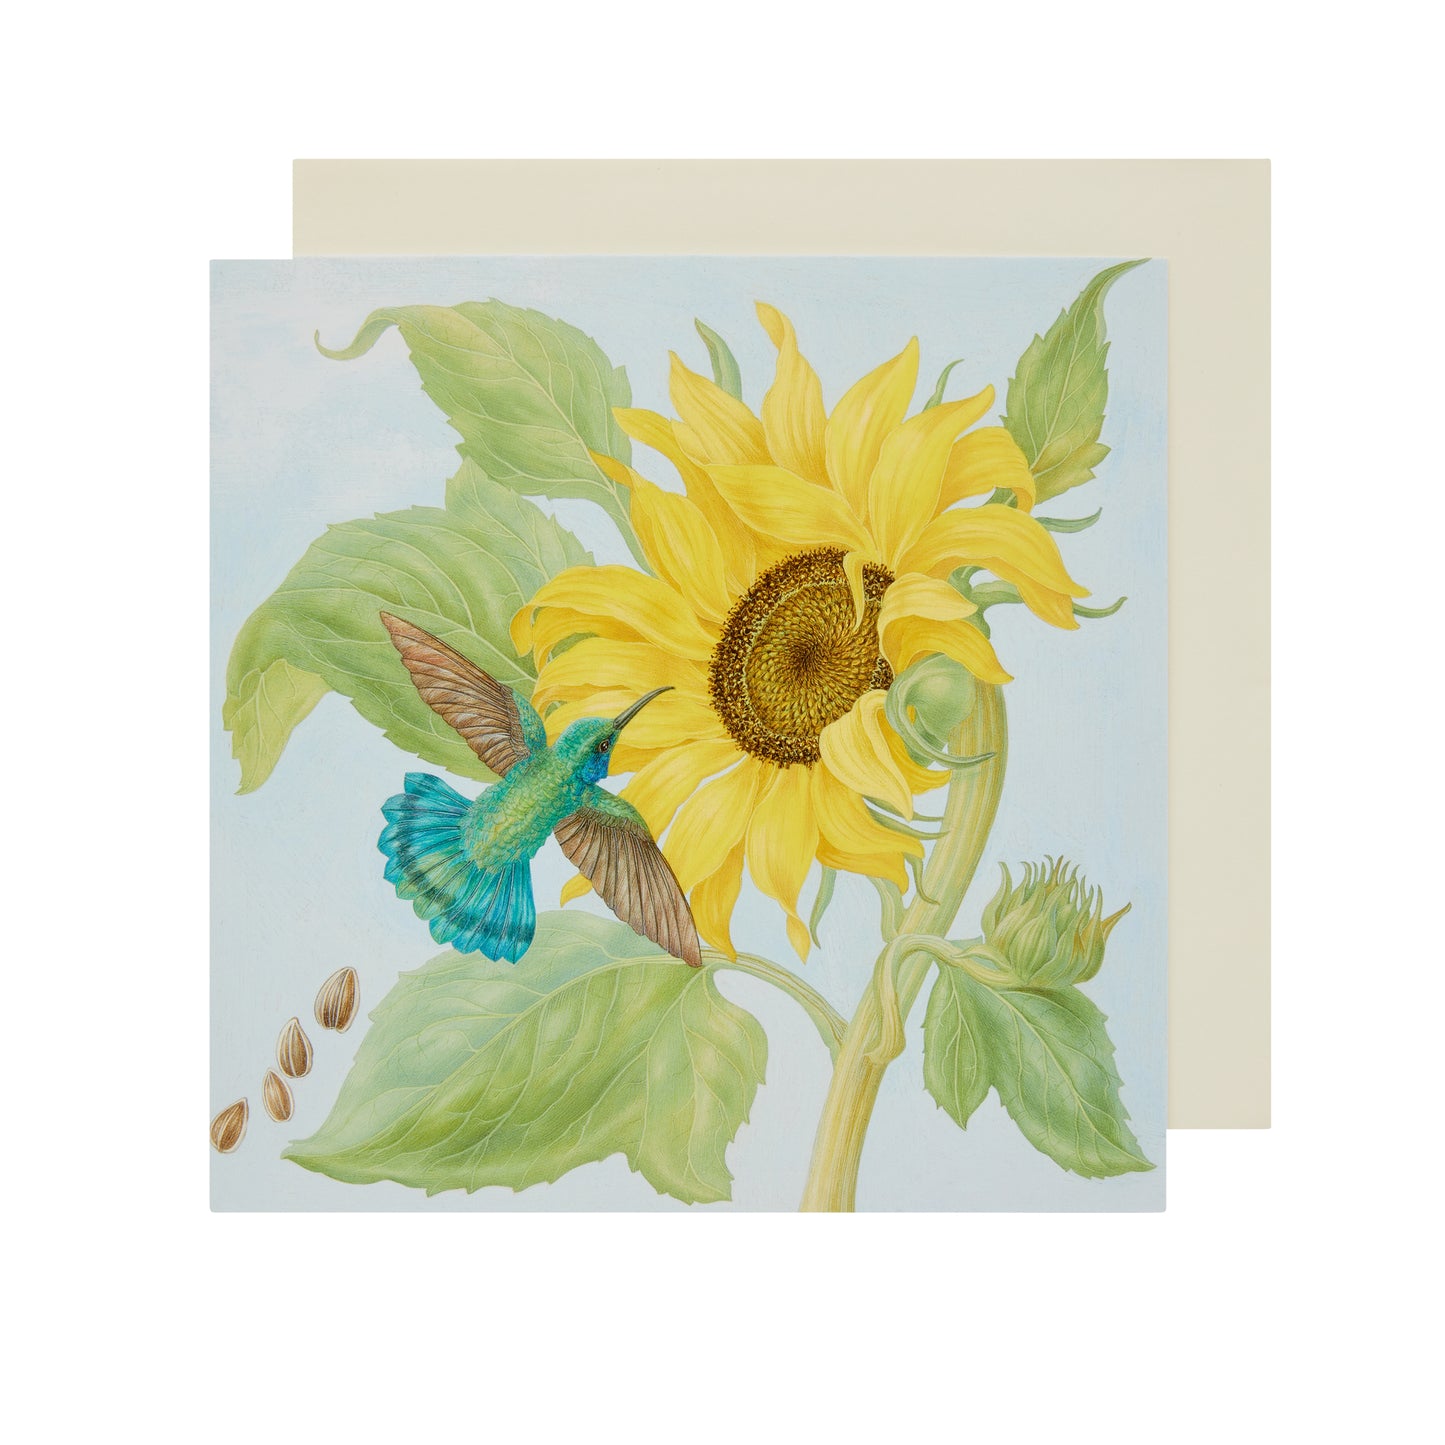 Hummingbird with Sunflower - Greetings card